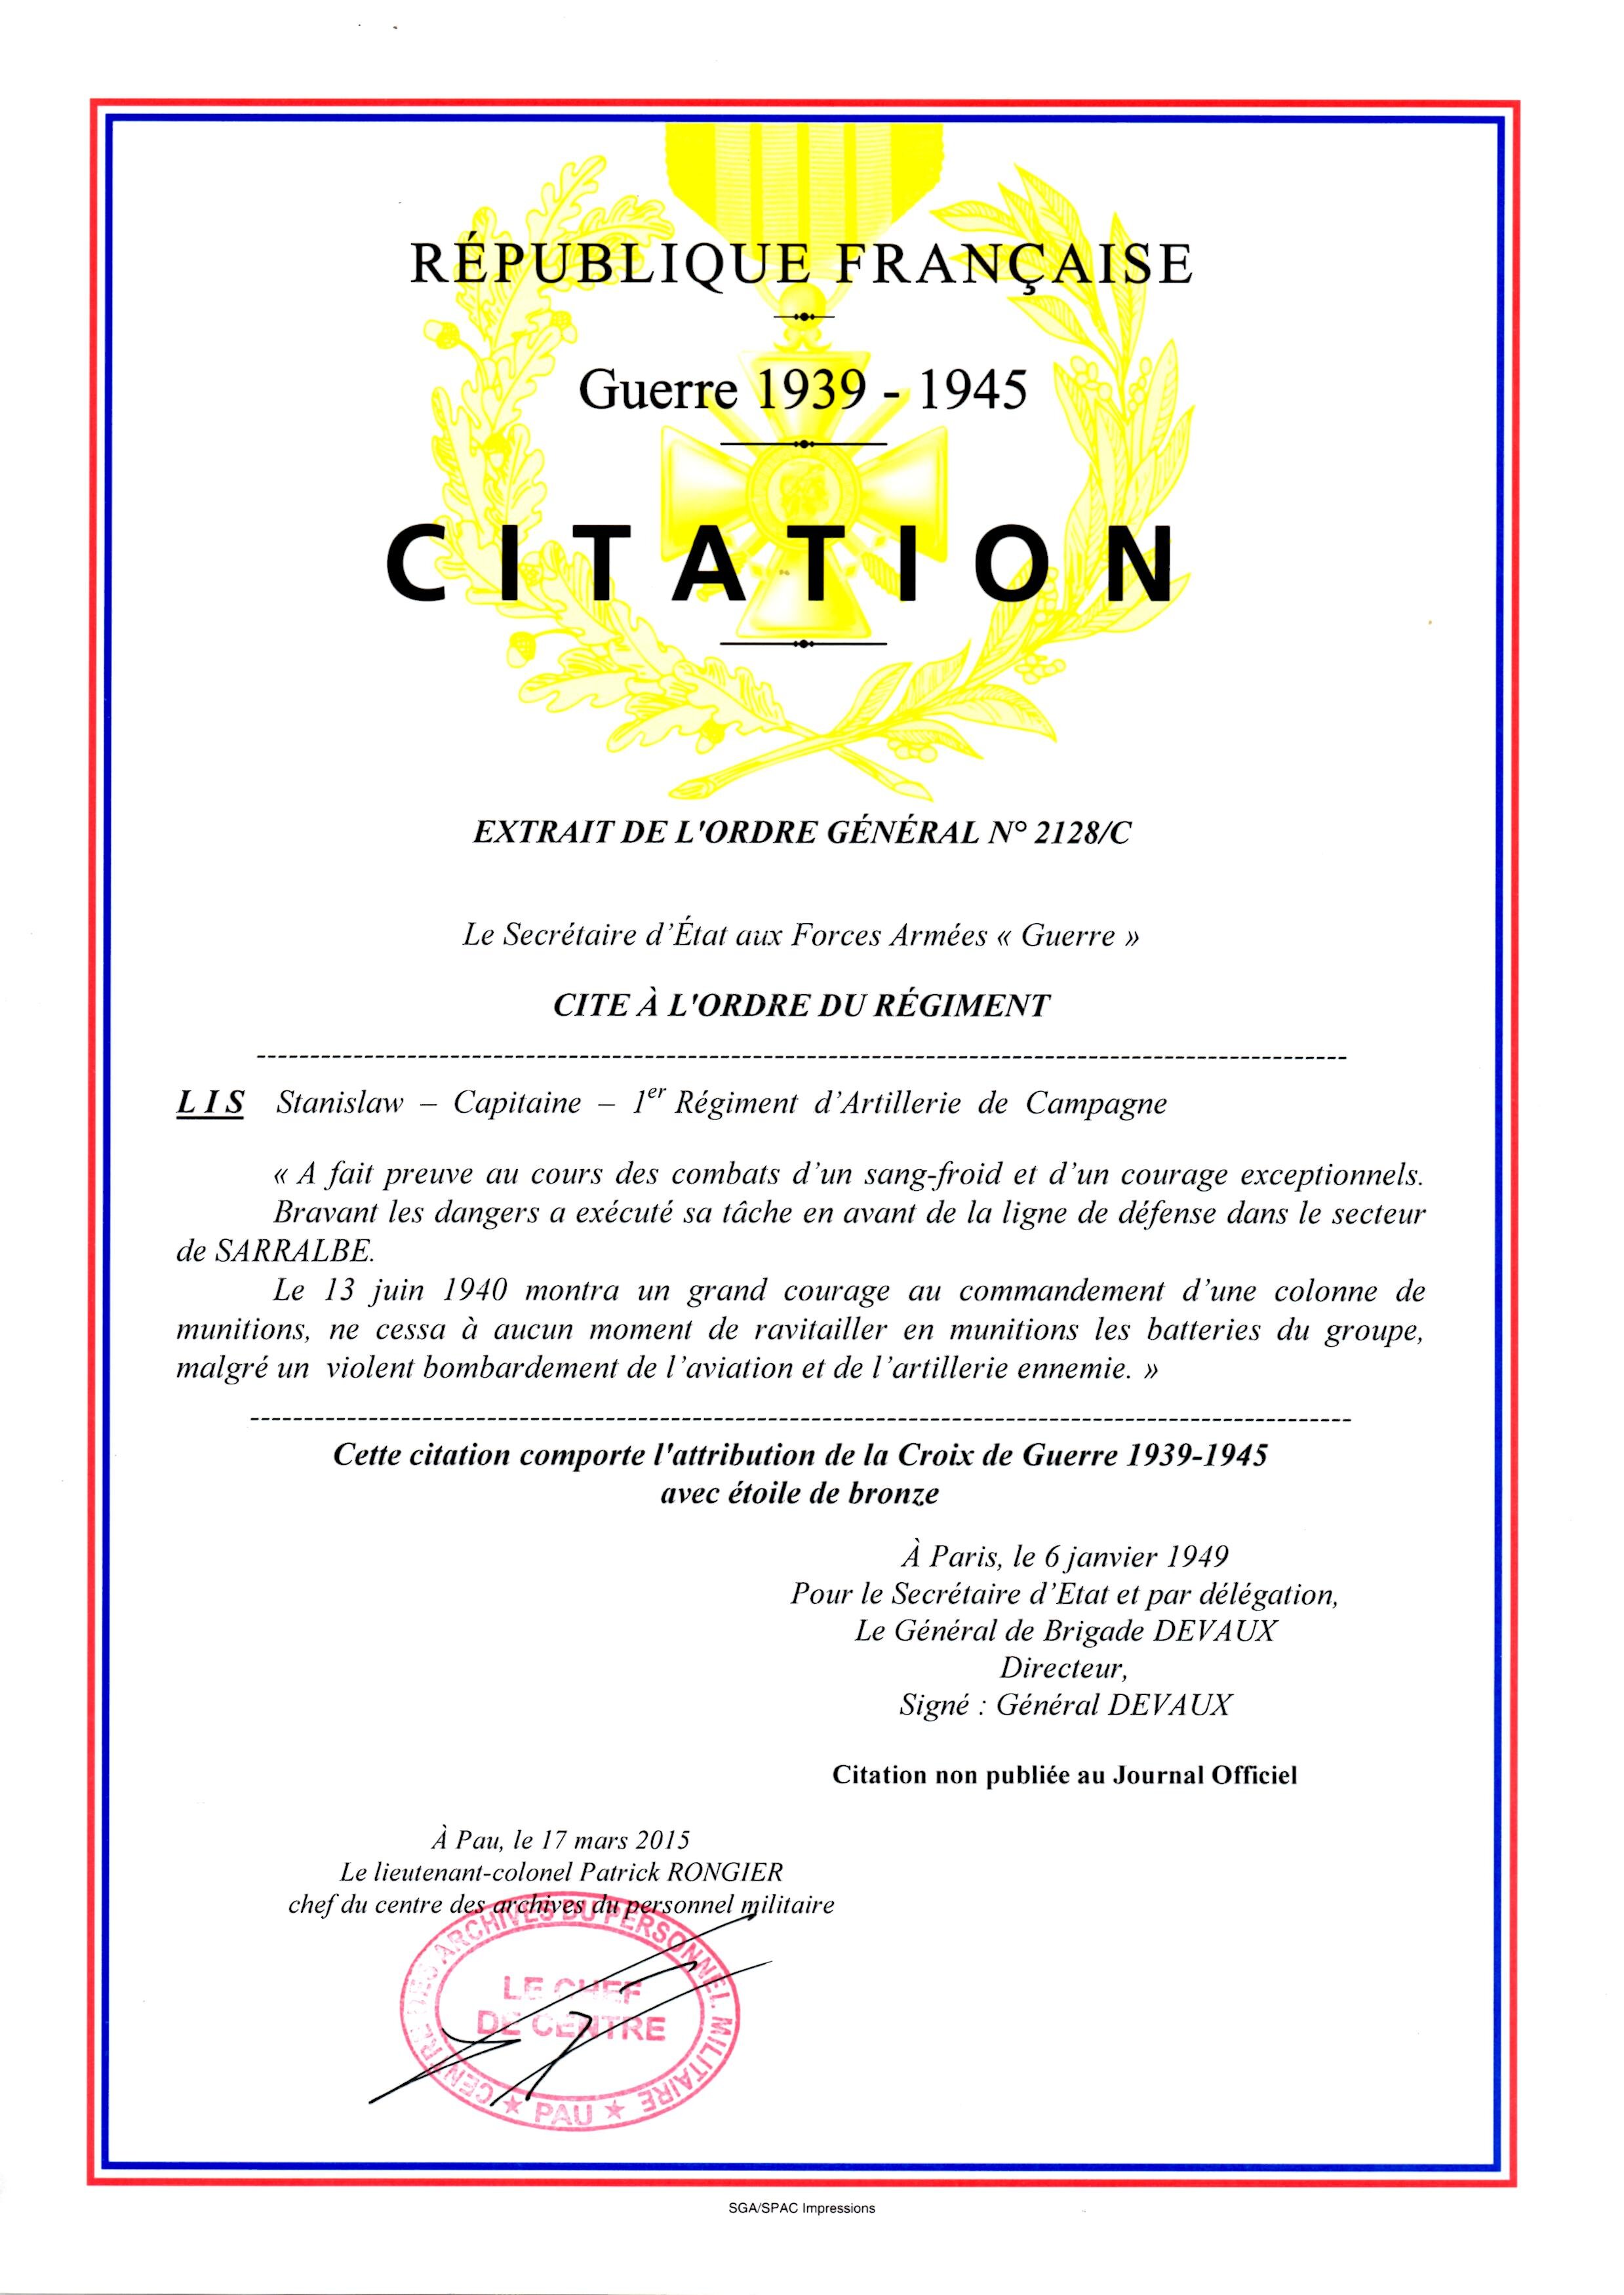 French Citation Stanislaw Lis.jpg